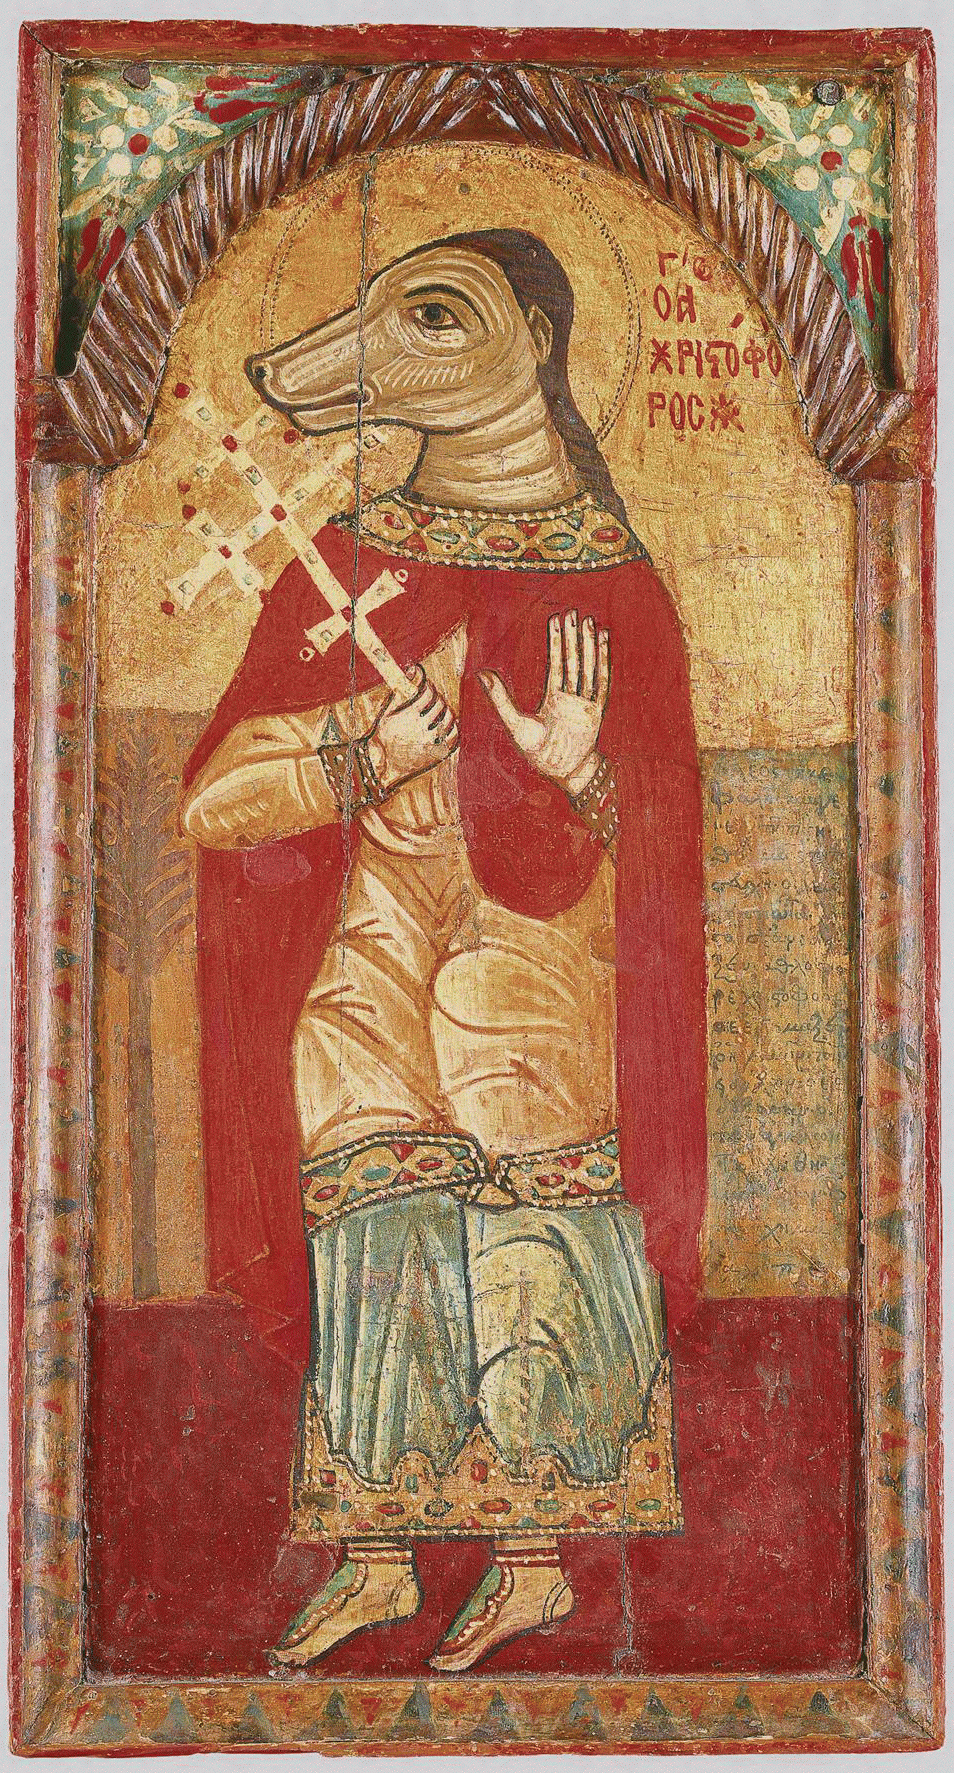 https://upload.wikimedia.org/wikipedia/commons/2/29/Saint_christopher_cynocephalus.gif